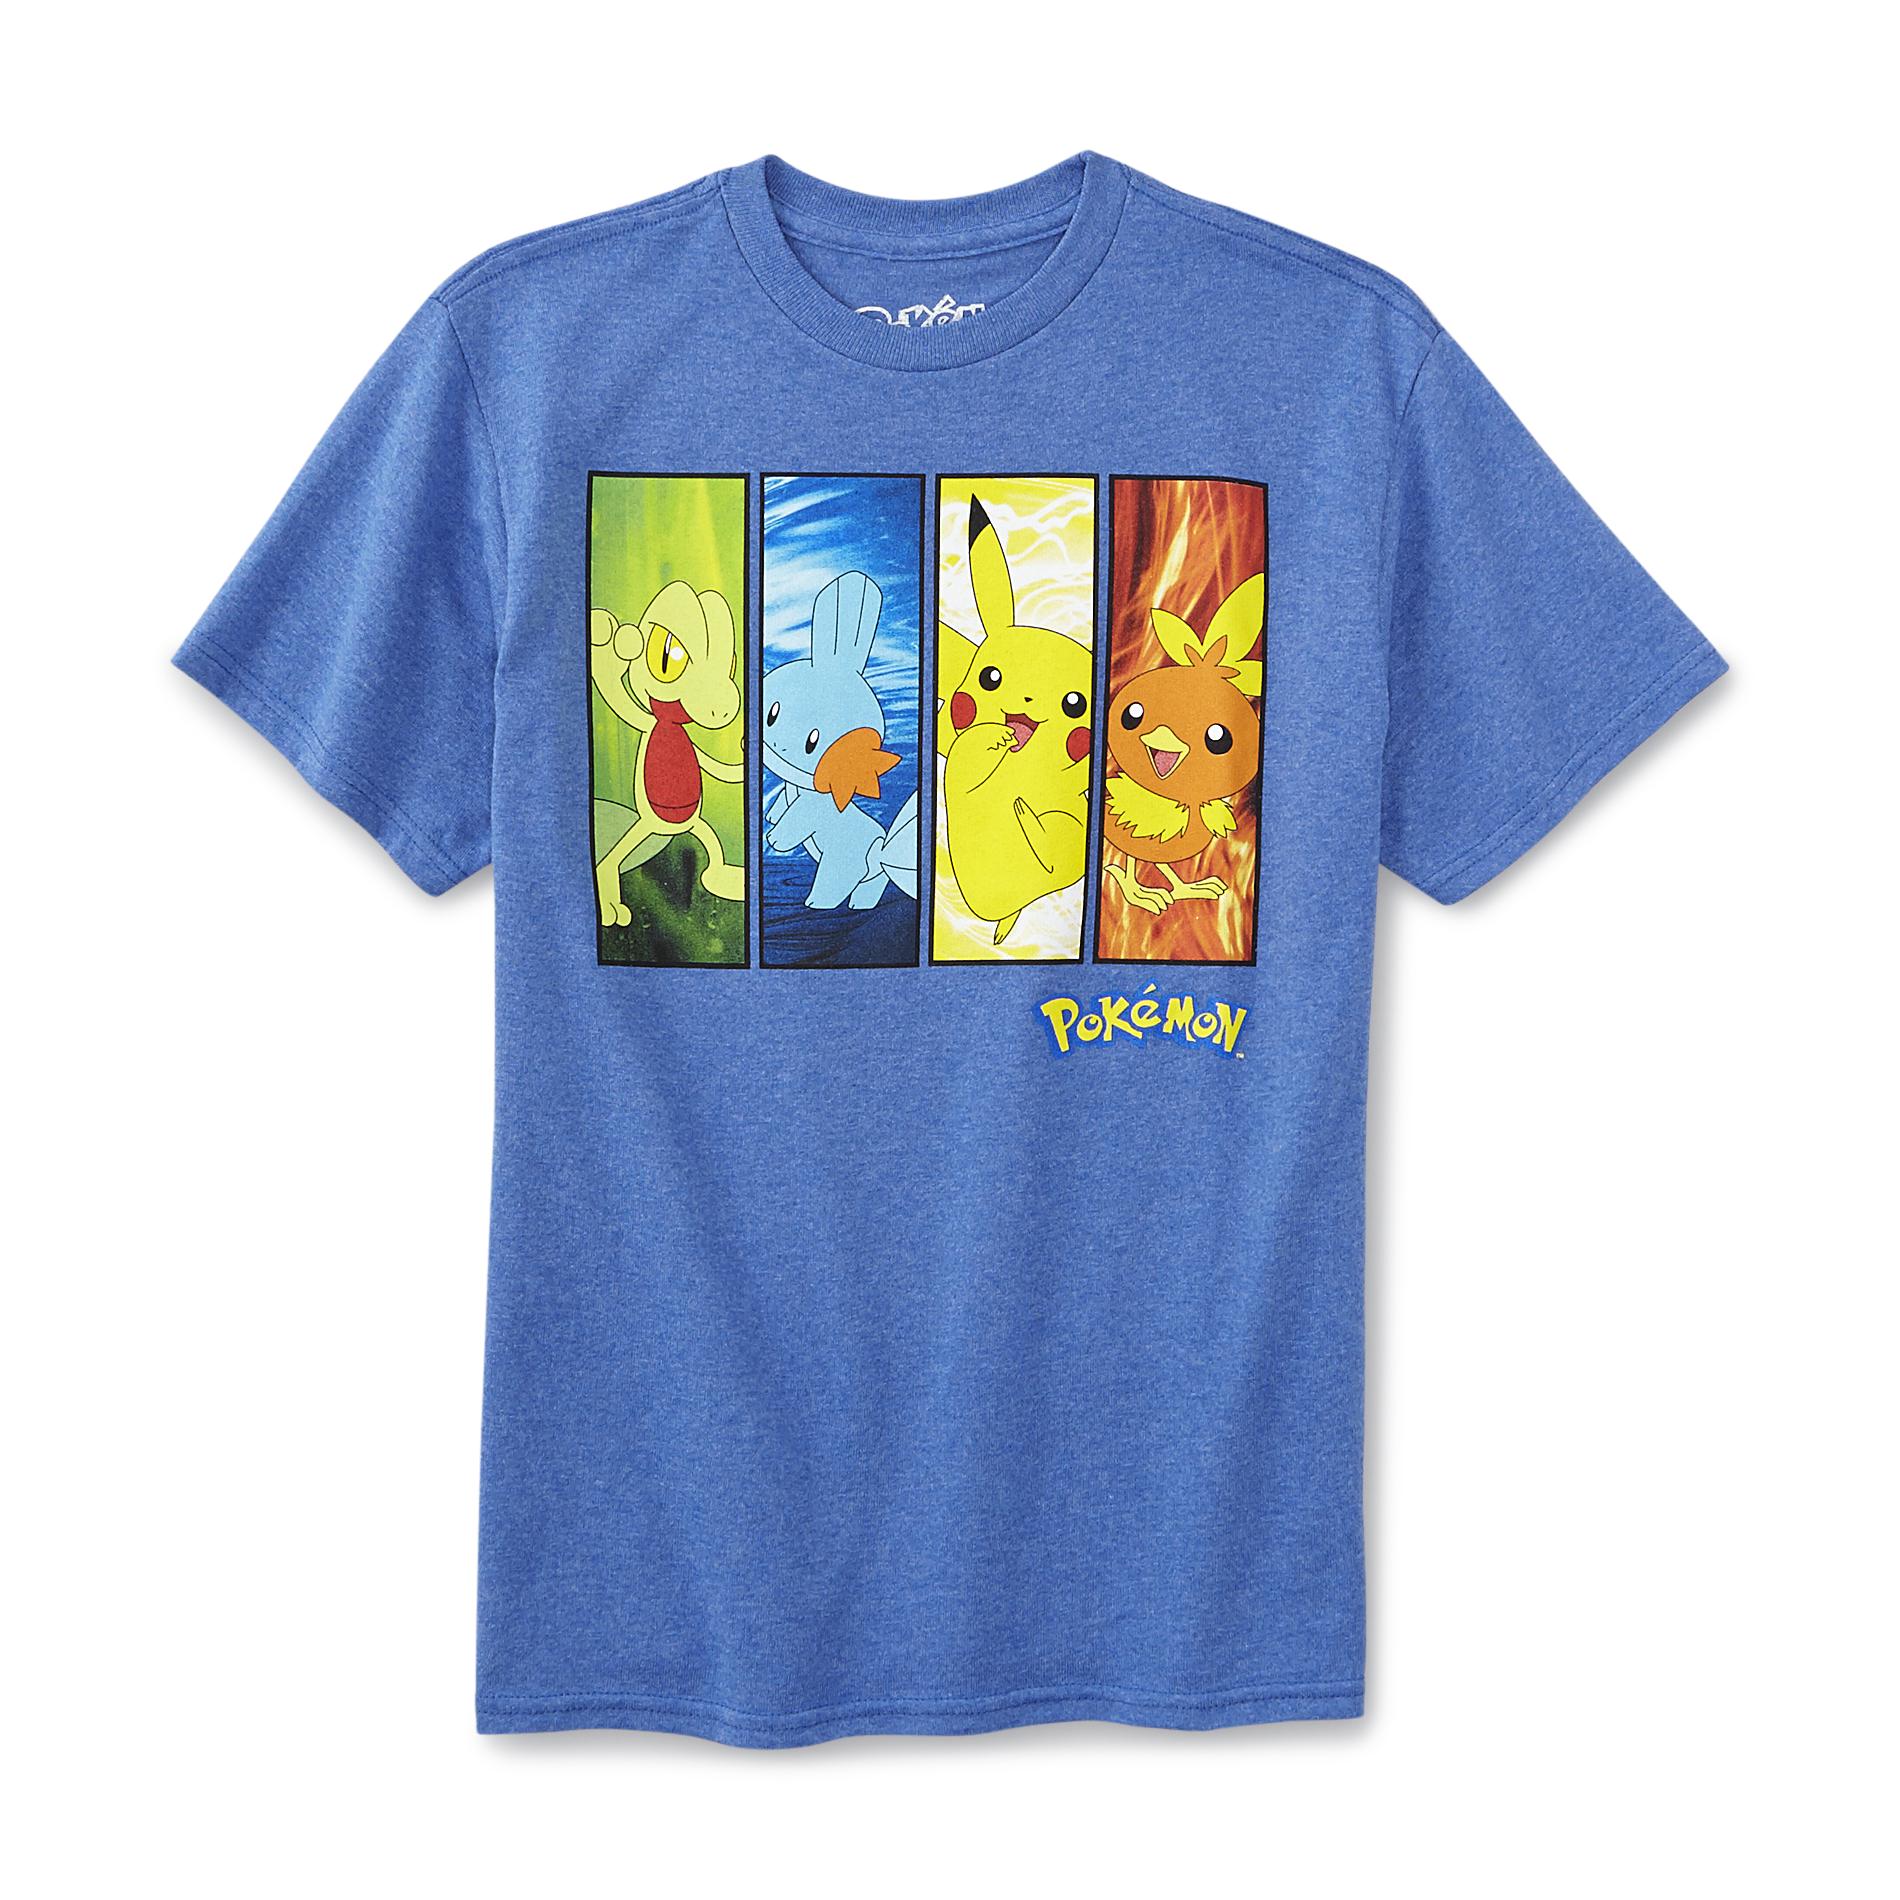 Nintendo Boy's Graphic T-Shirt